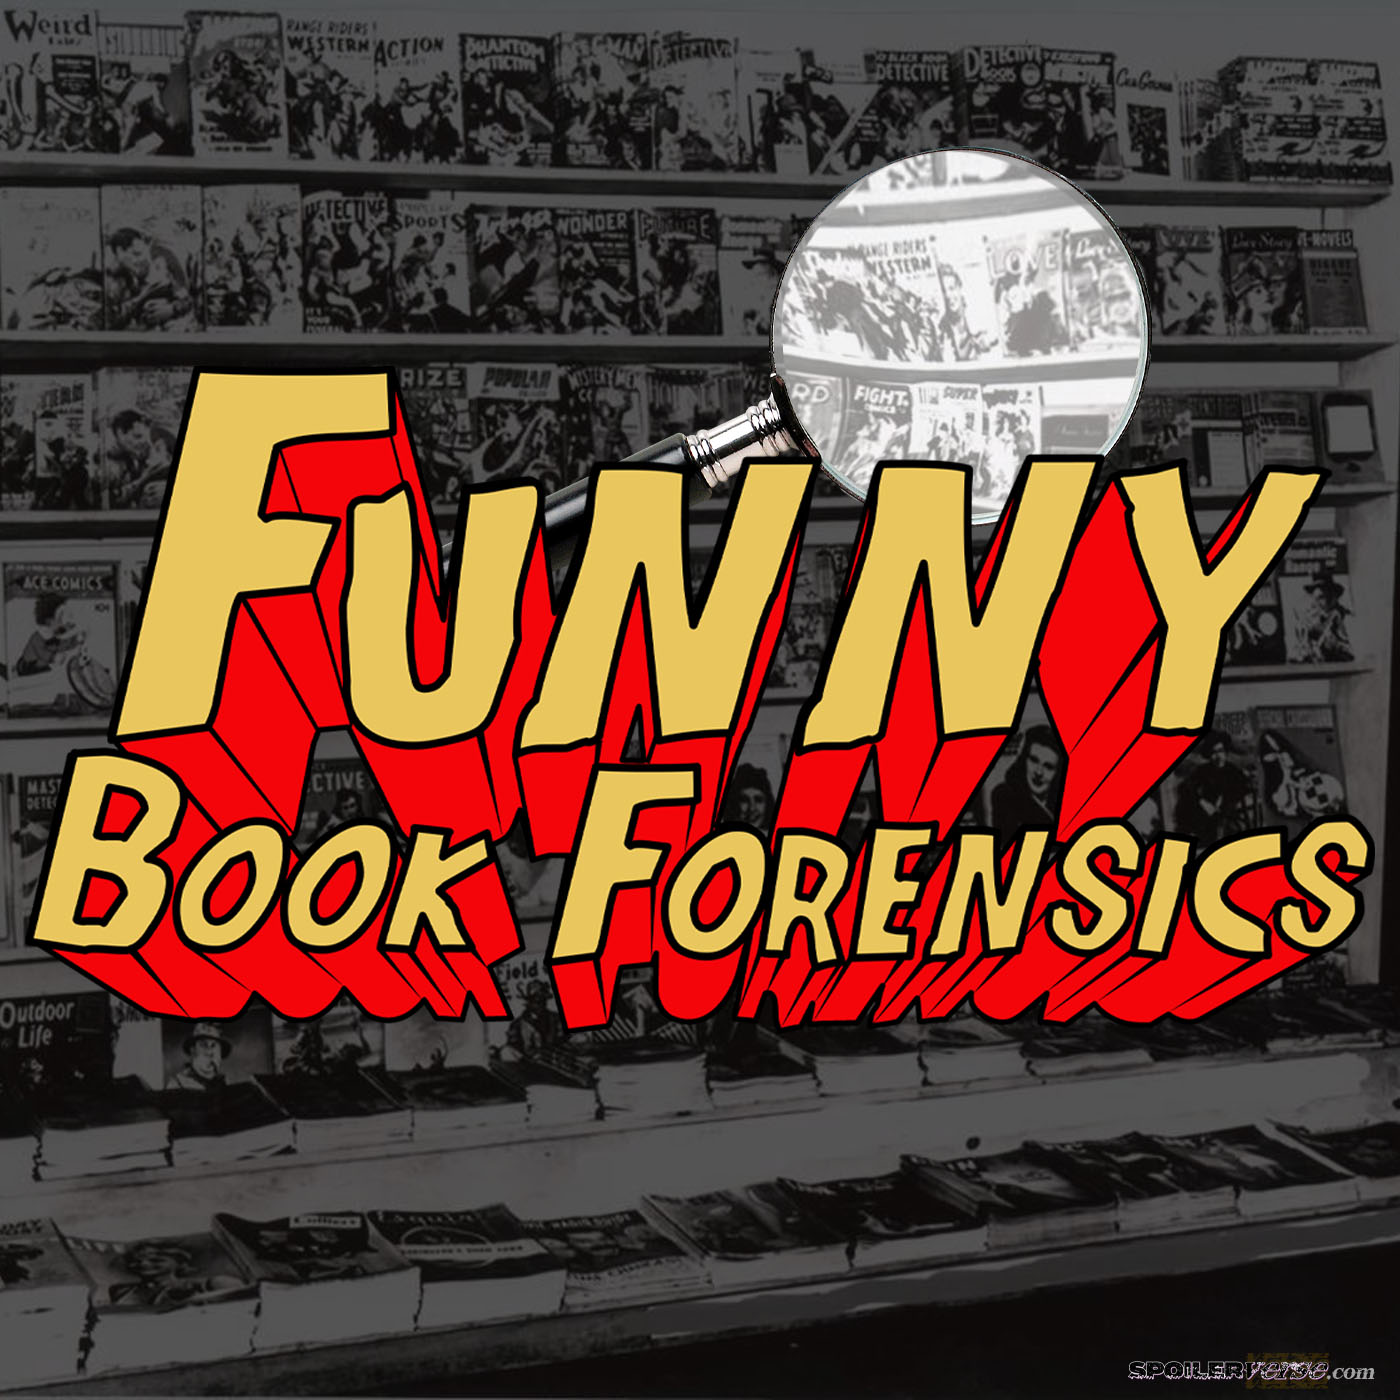 Funny Book Forensics 316 Friendship Bridge